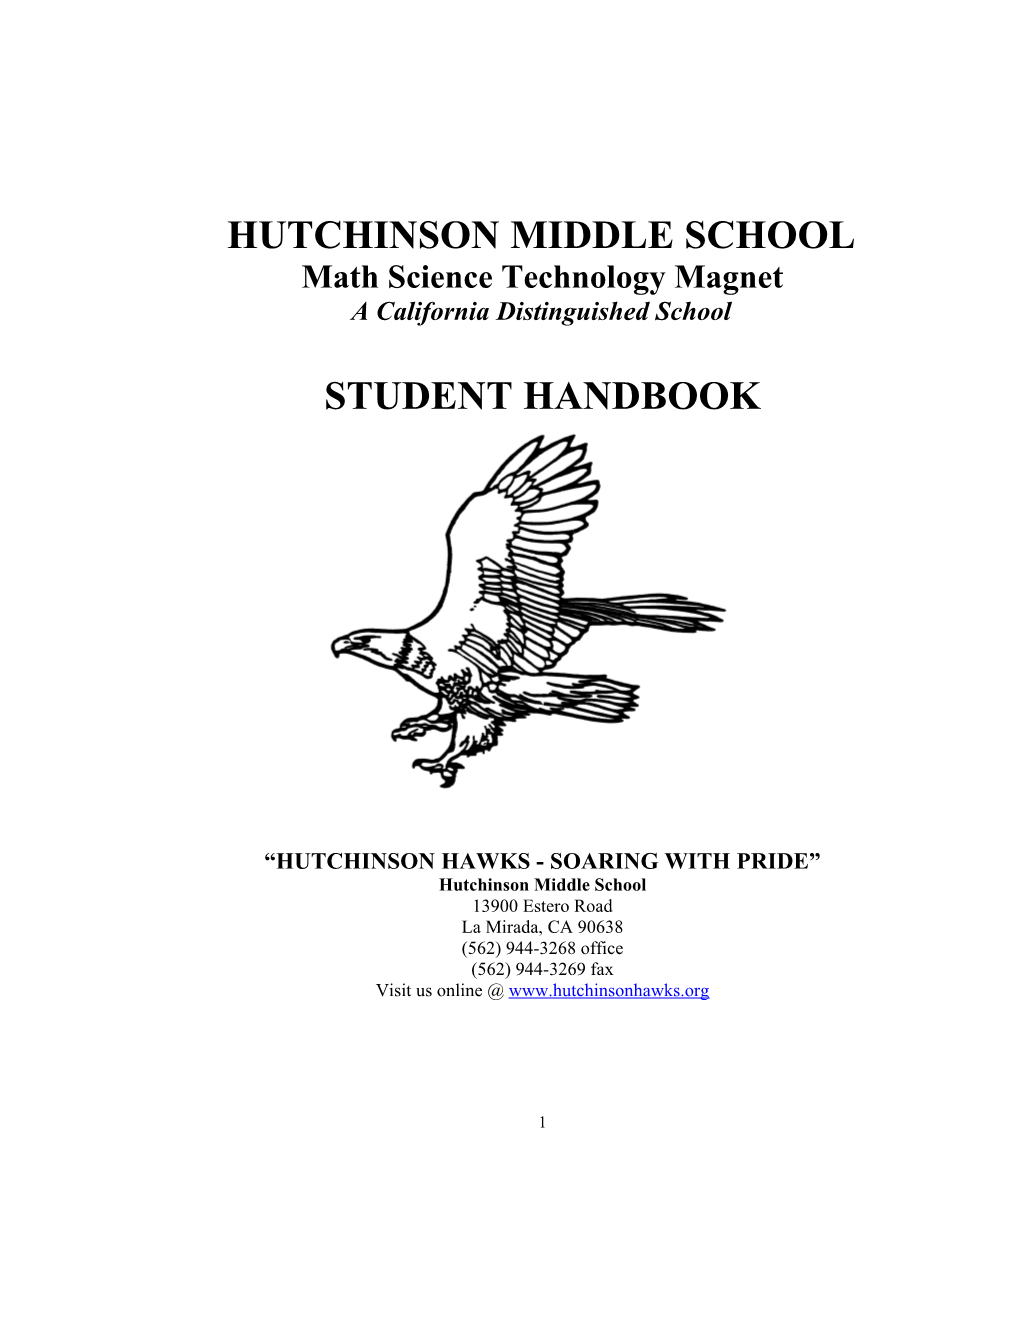 Hutchinson Middle School